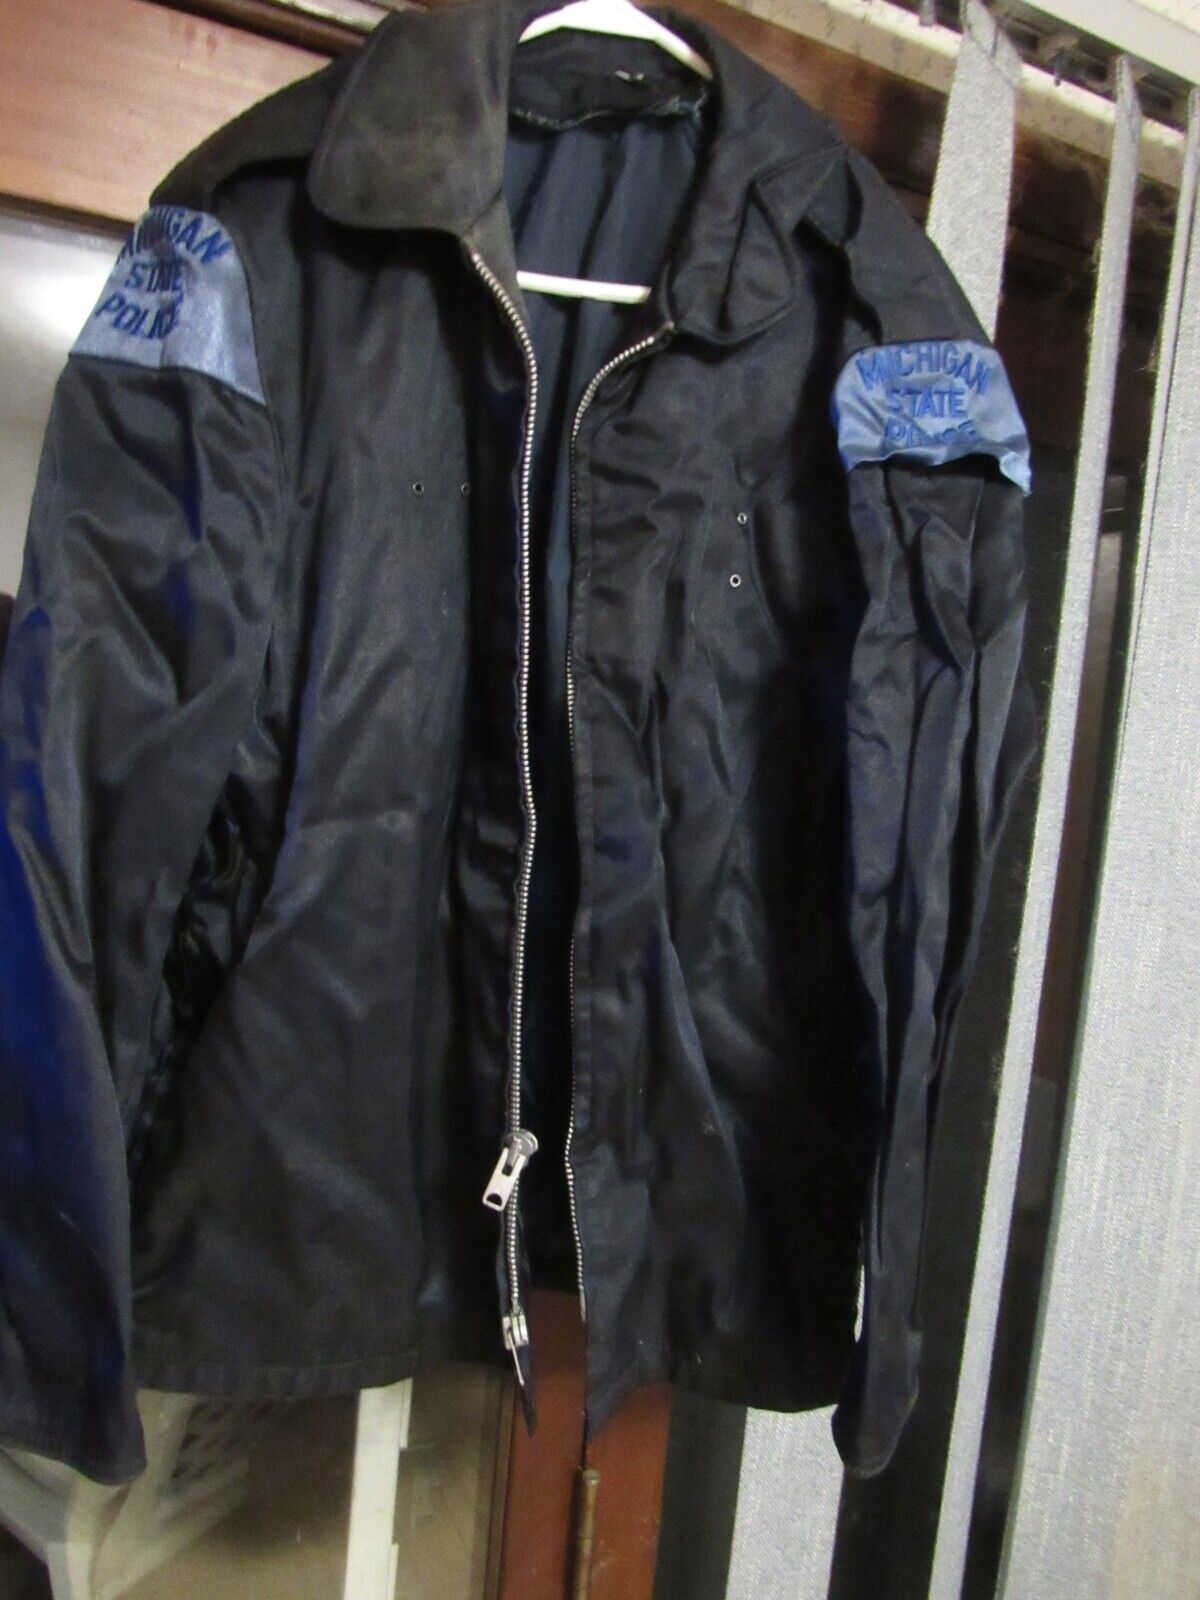 Michigan State Police Vintage Duty Jacket